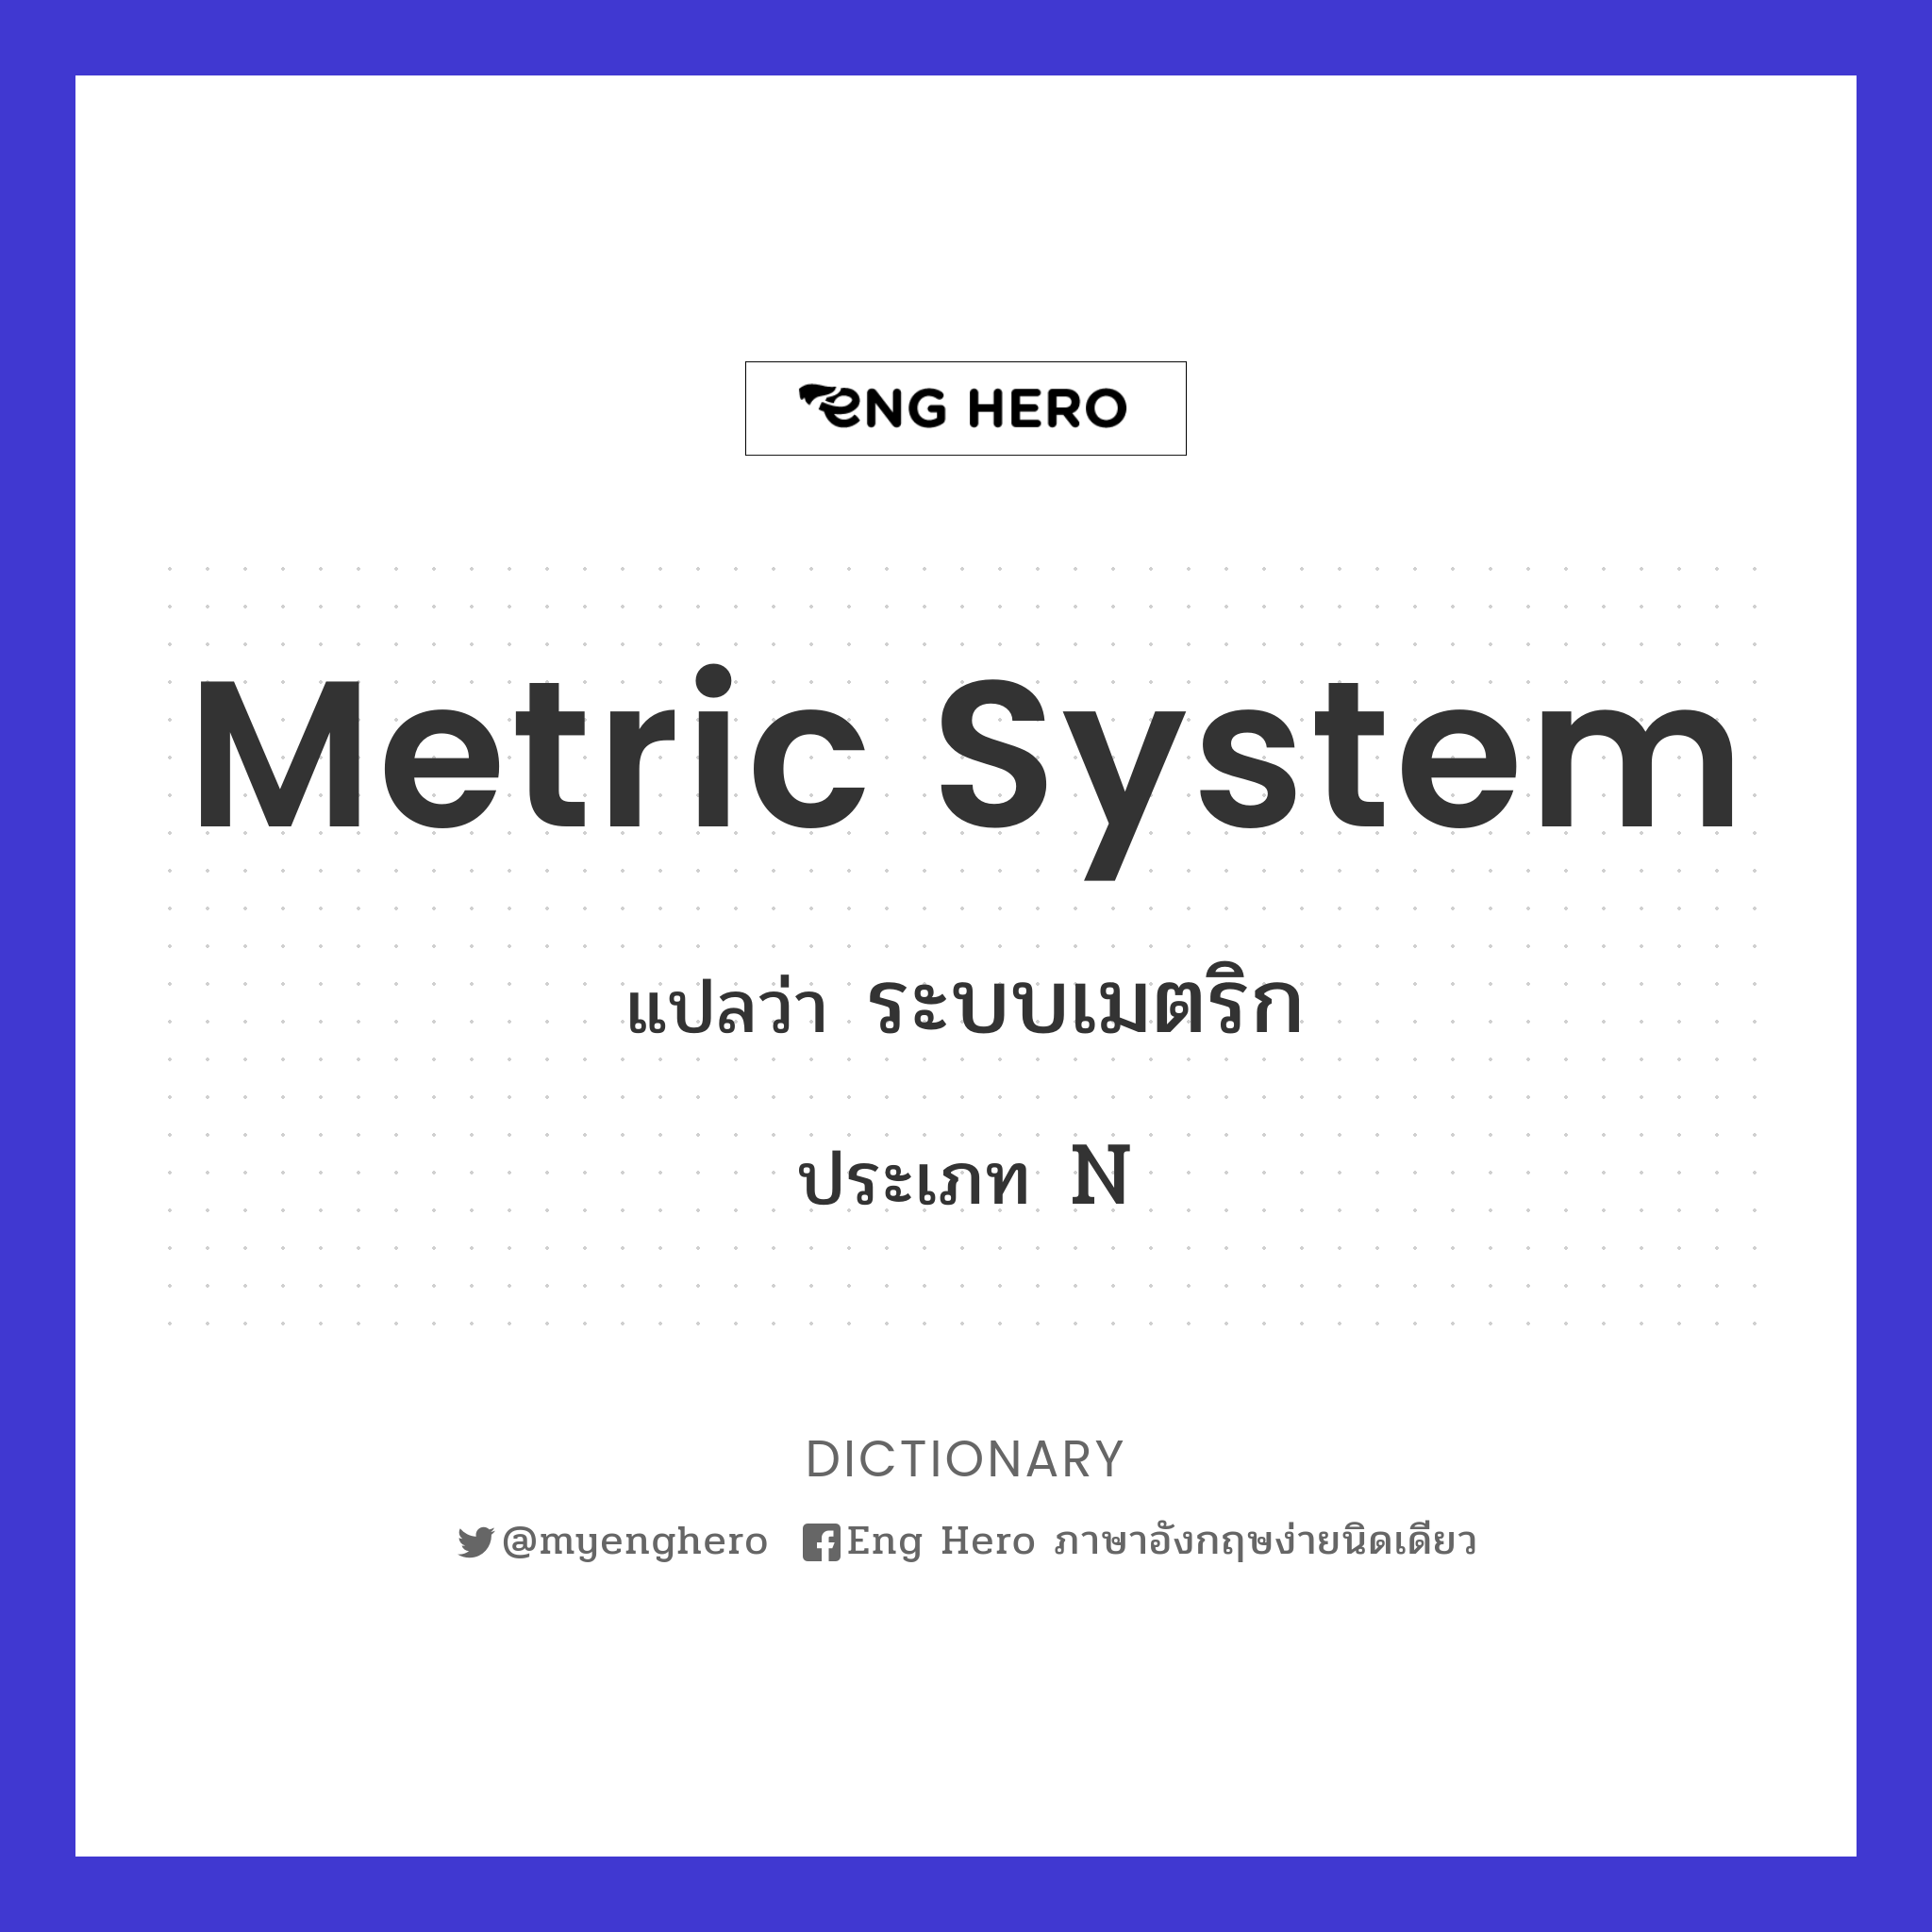 metric system